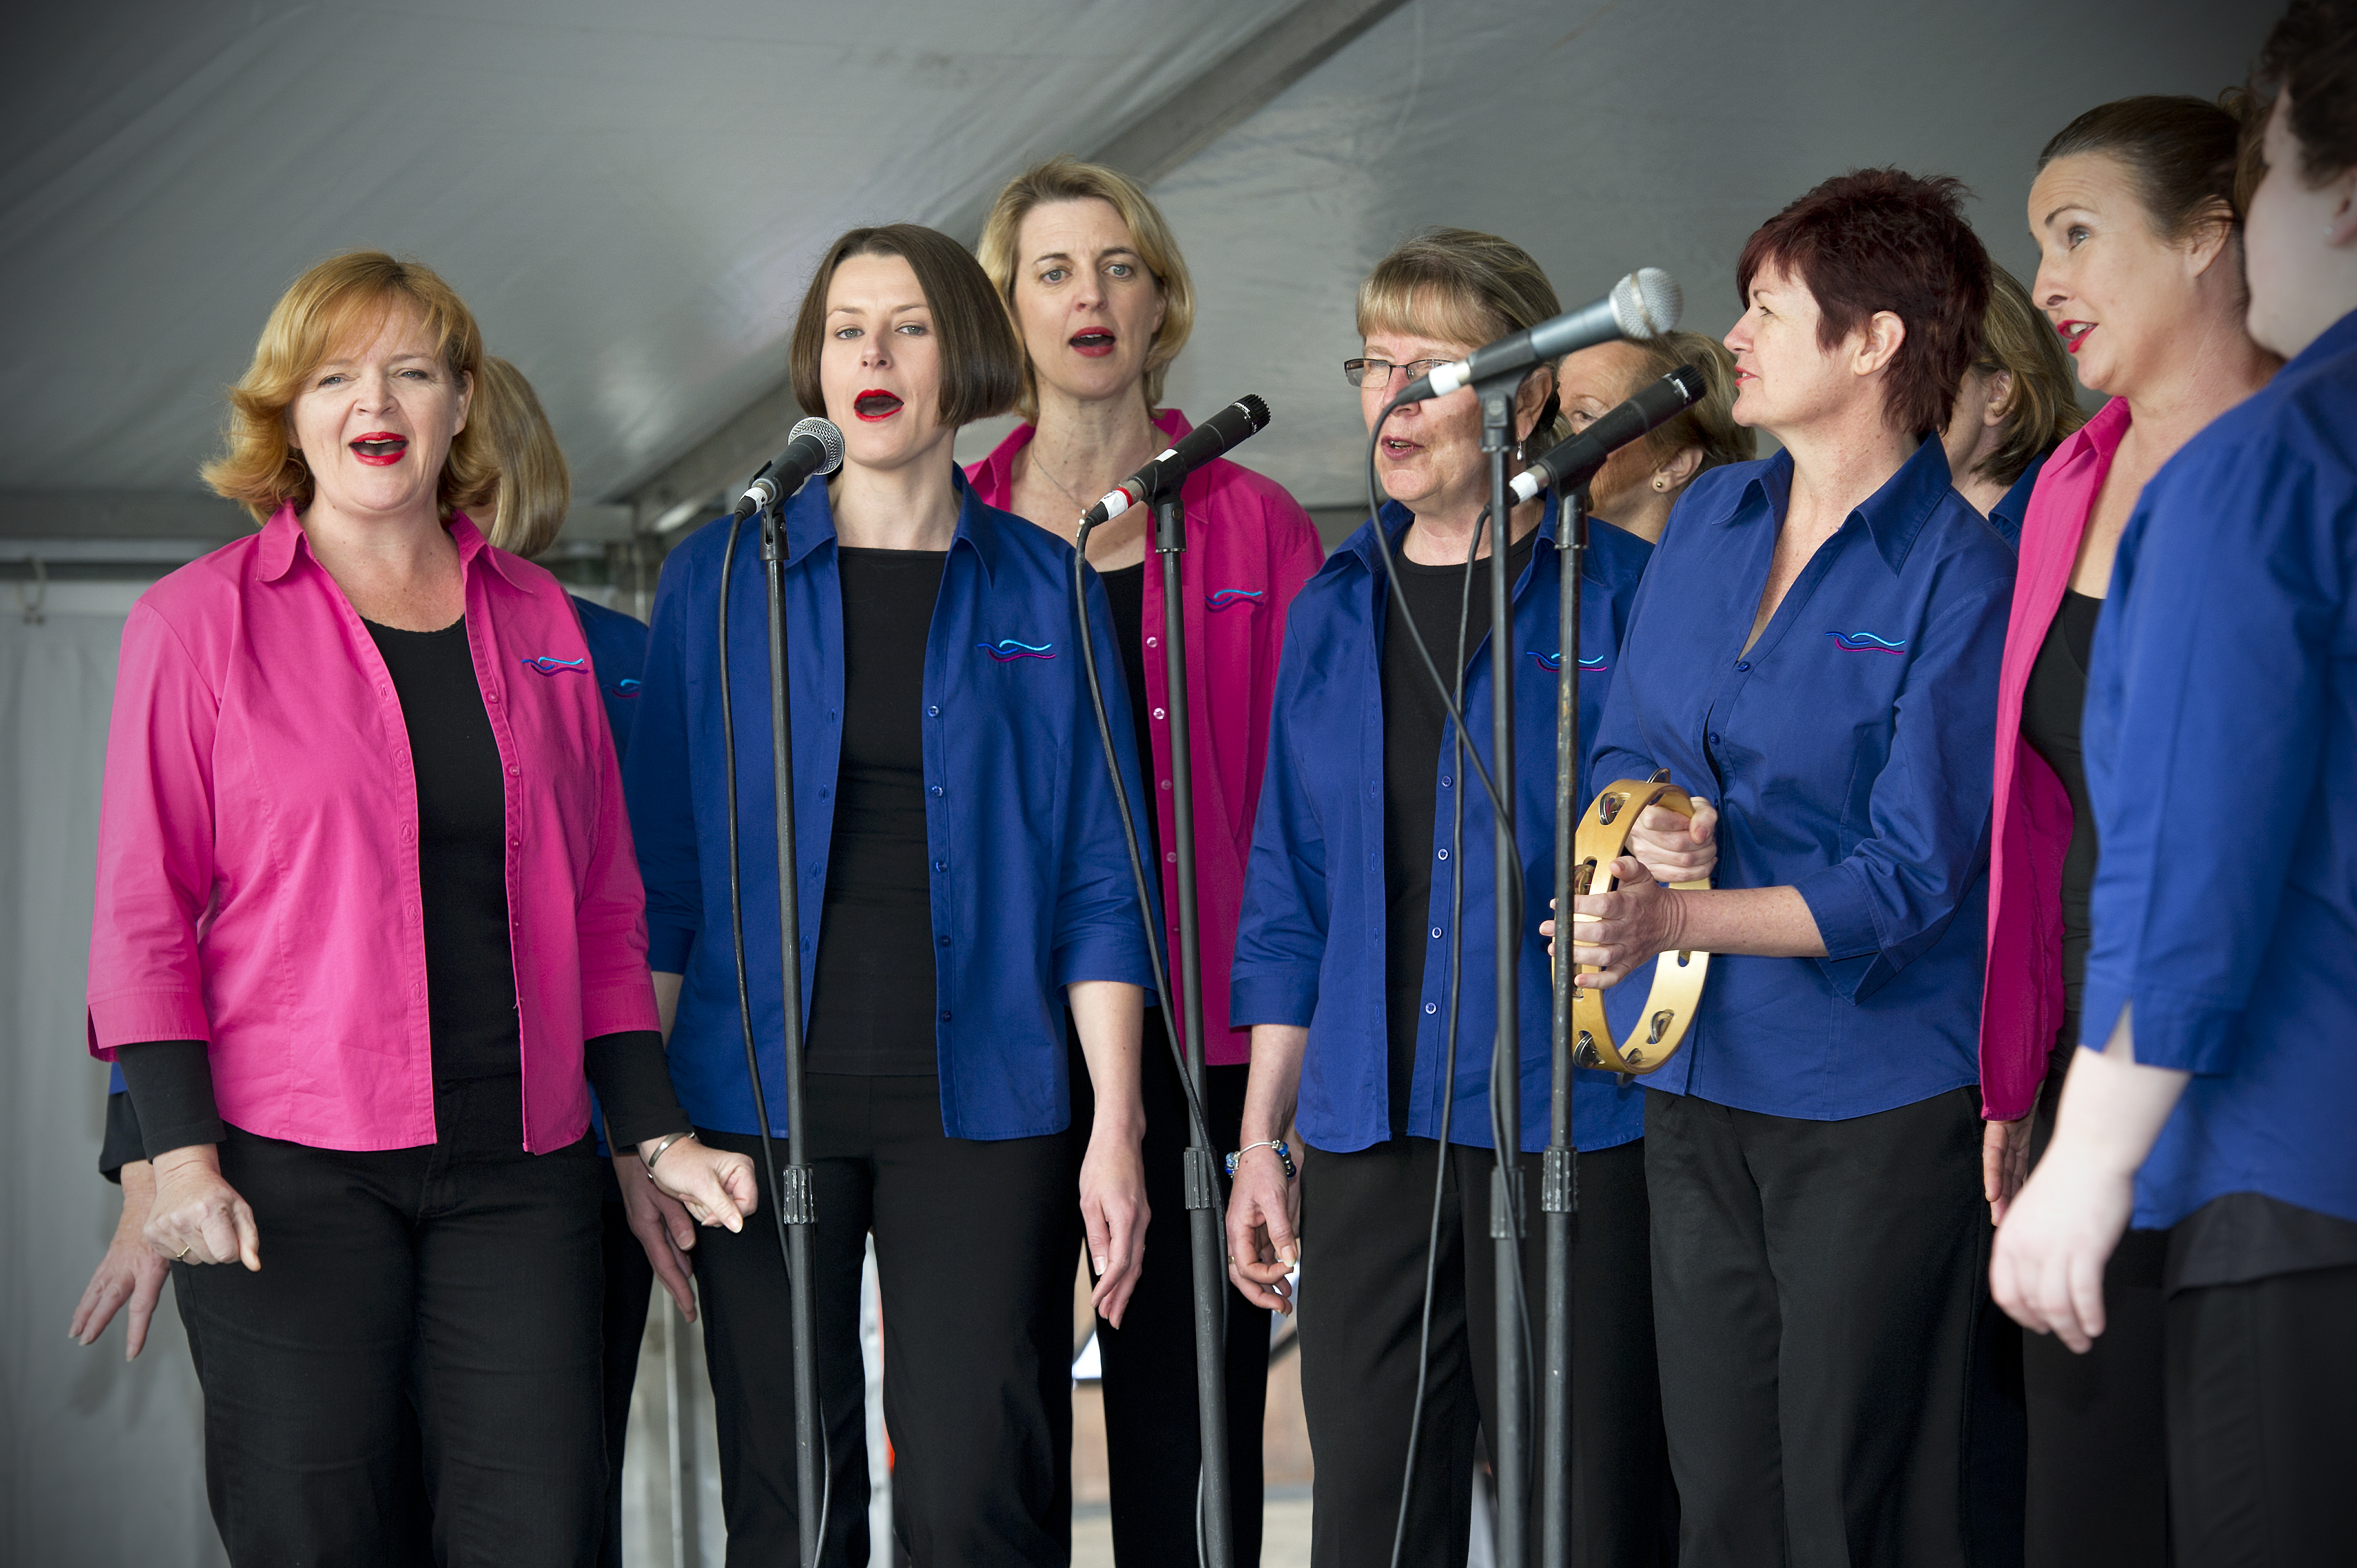 choir singing on stage